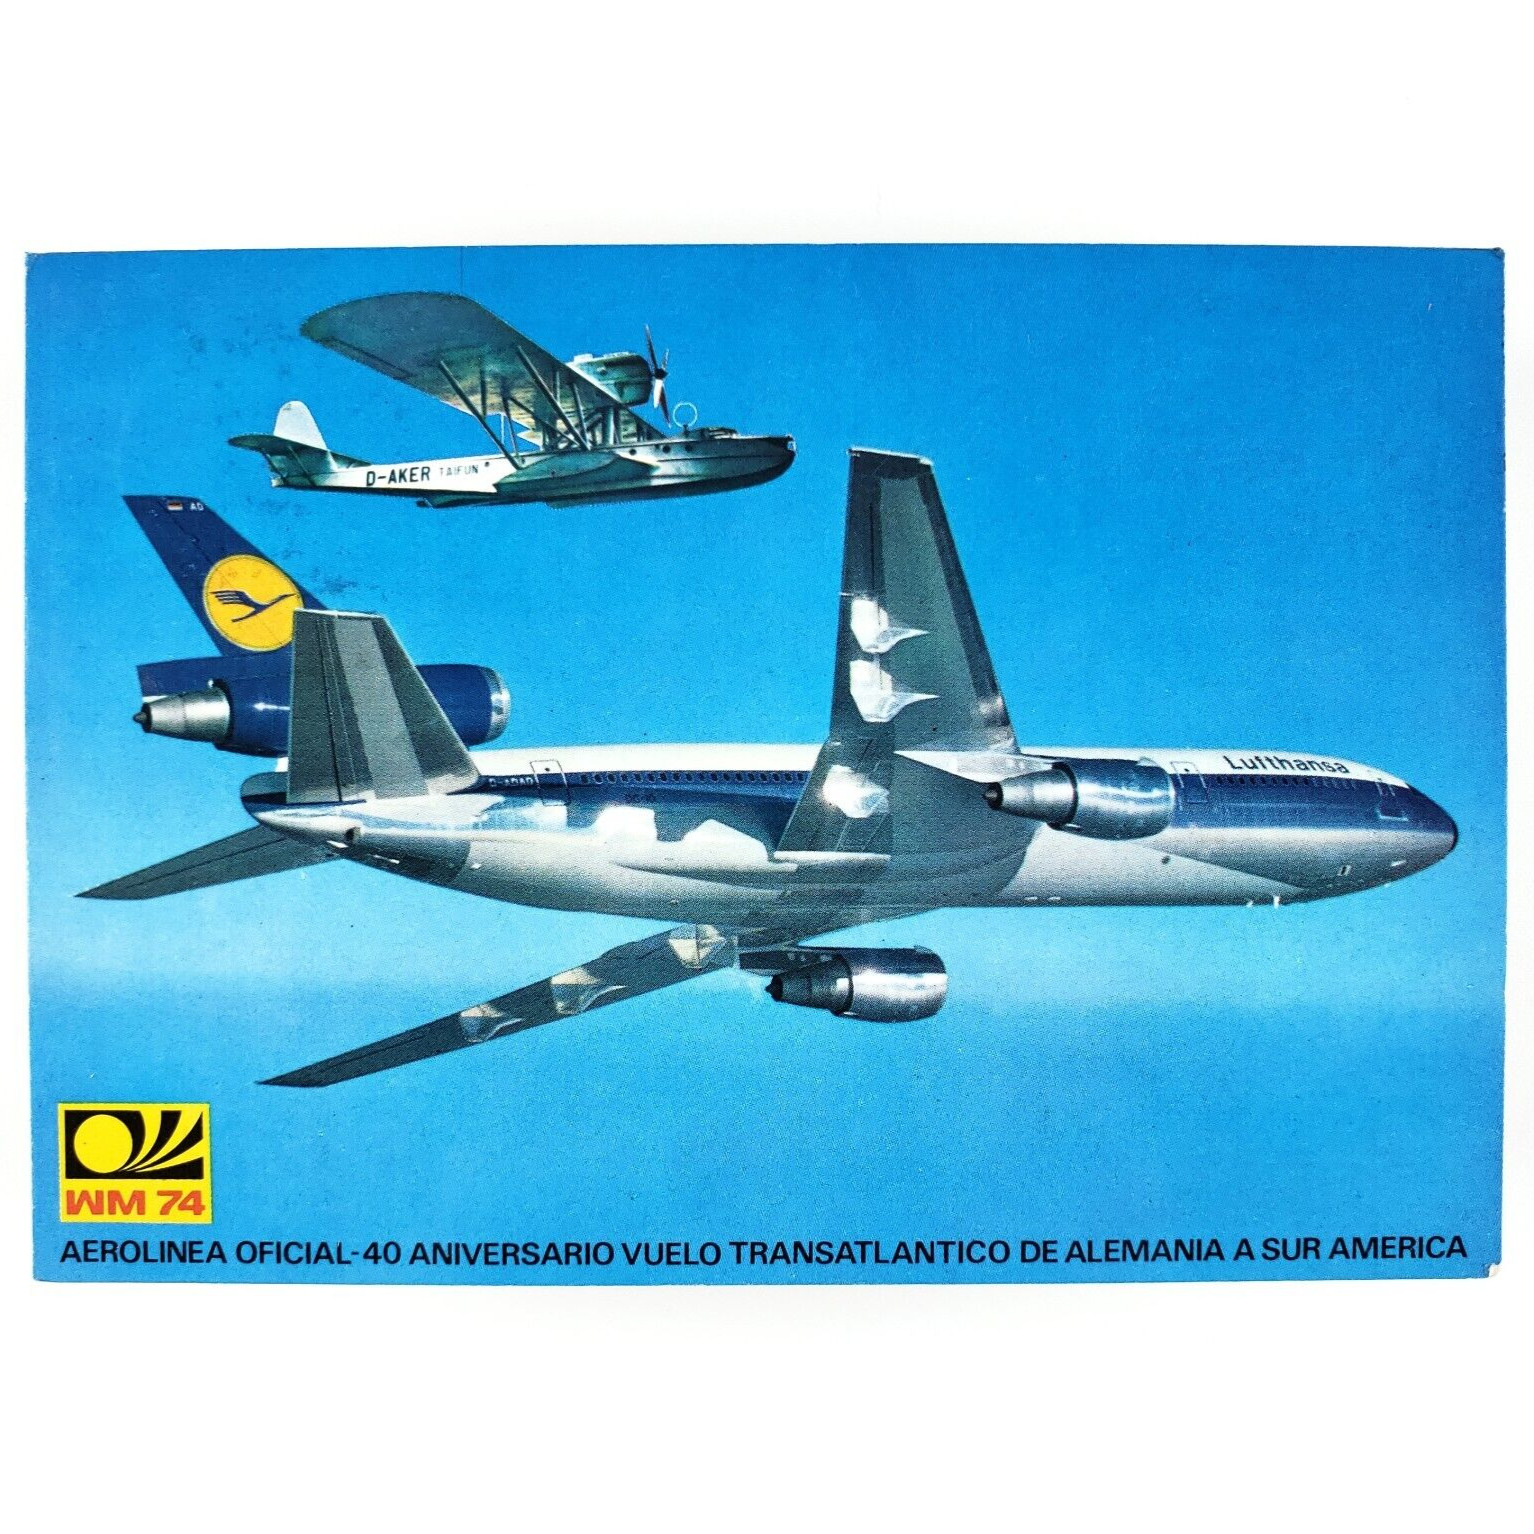 Lufthansa Airline Transatlantic Flight Postcard 4x6 German Airplane Jet DE C2165